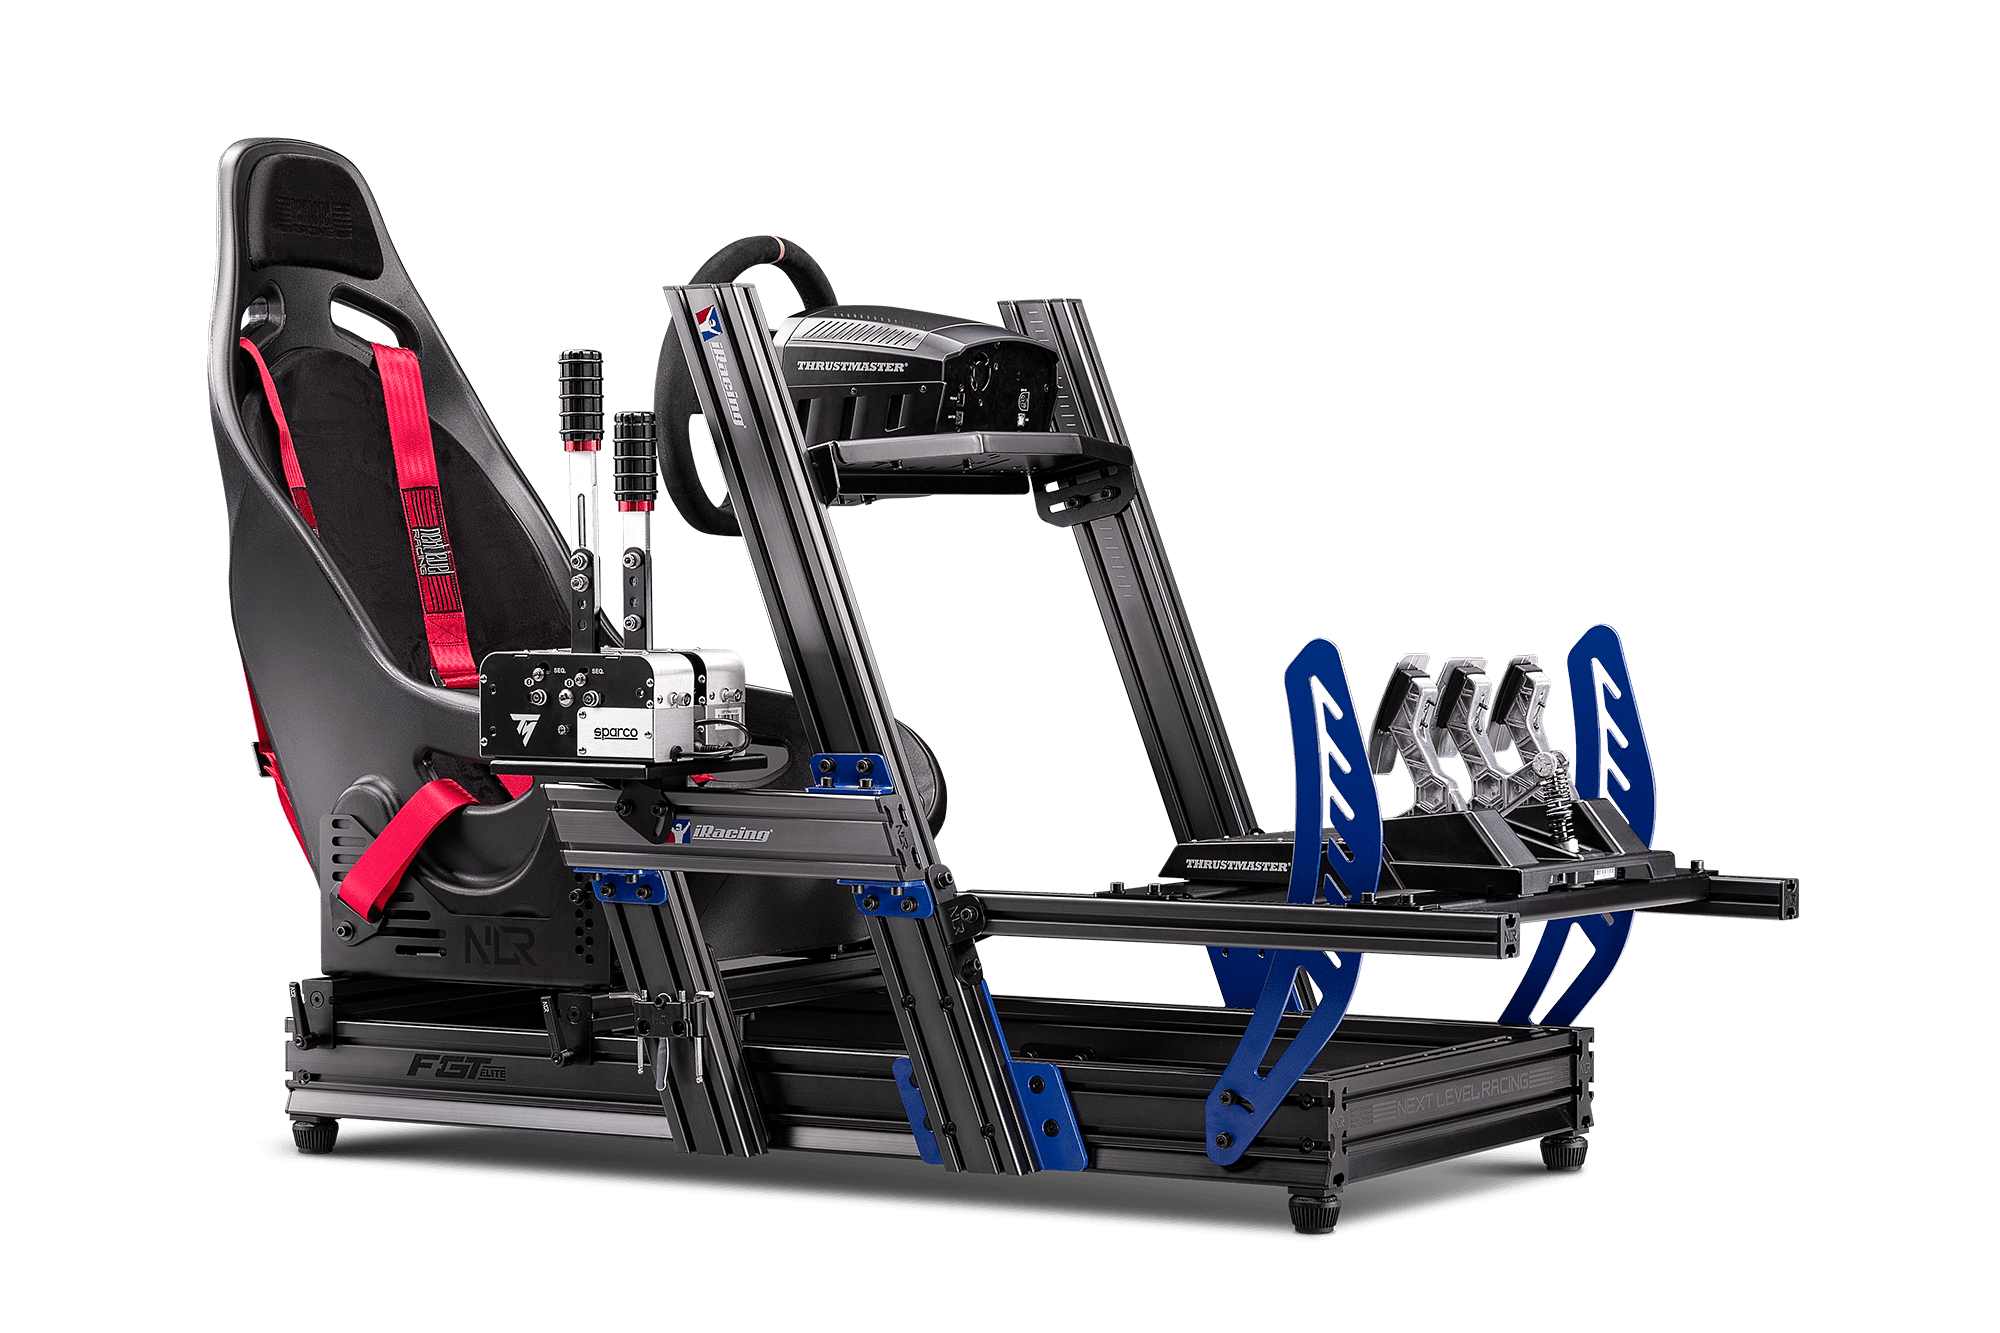 Next Level Racing F-GT Racing Cockpit (NLR-FGT)